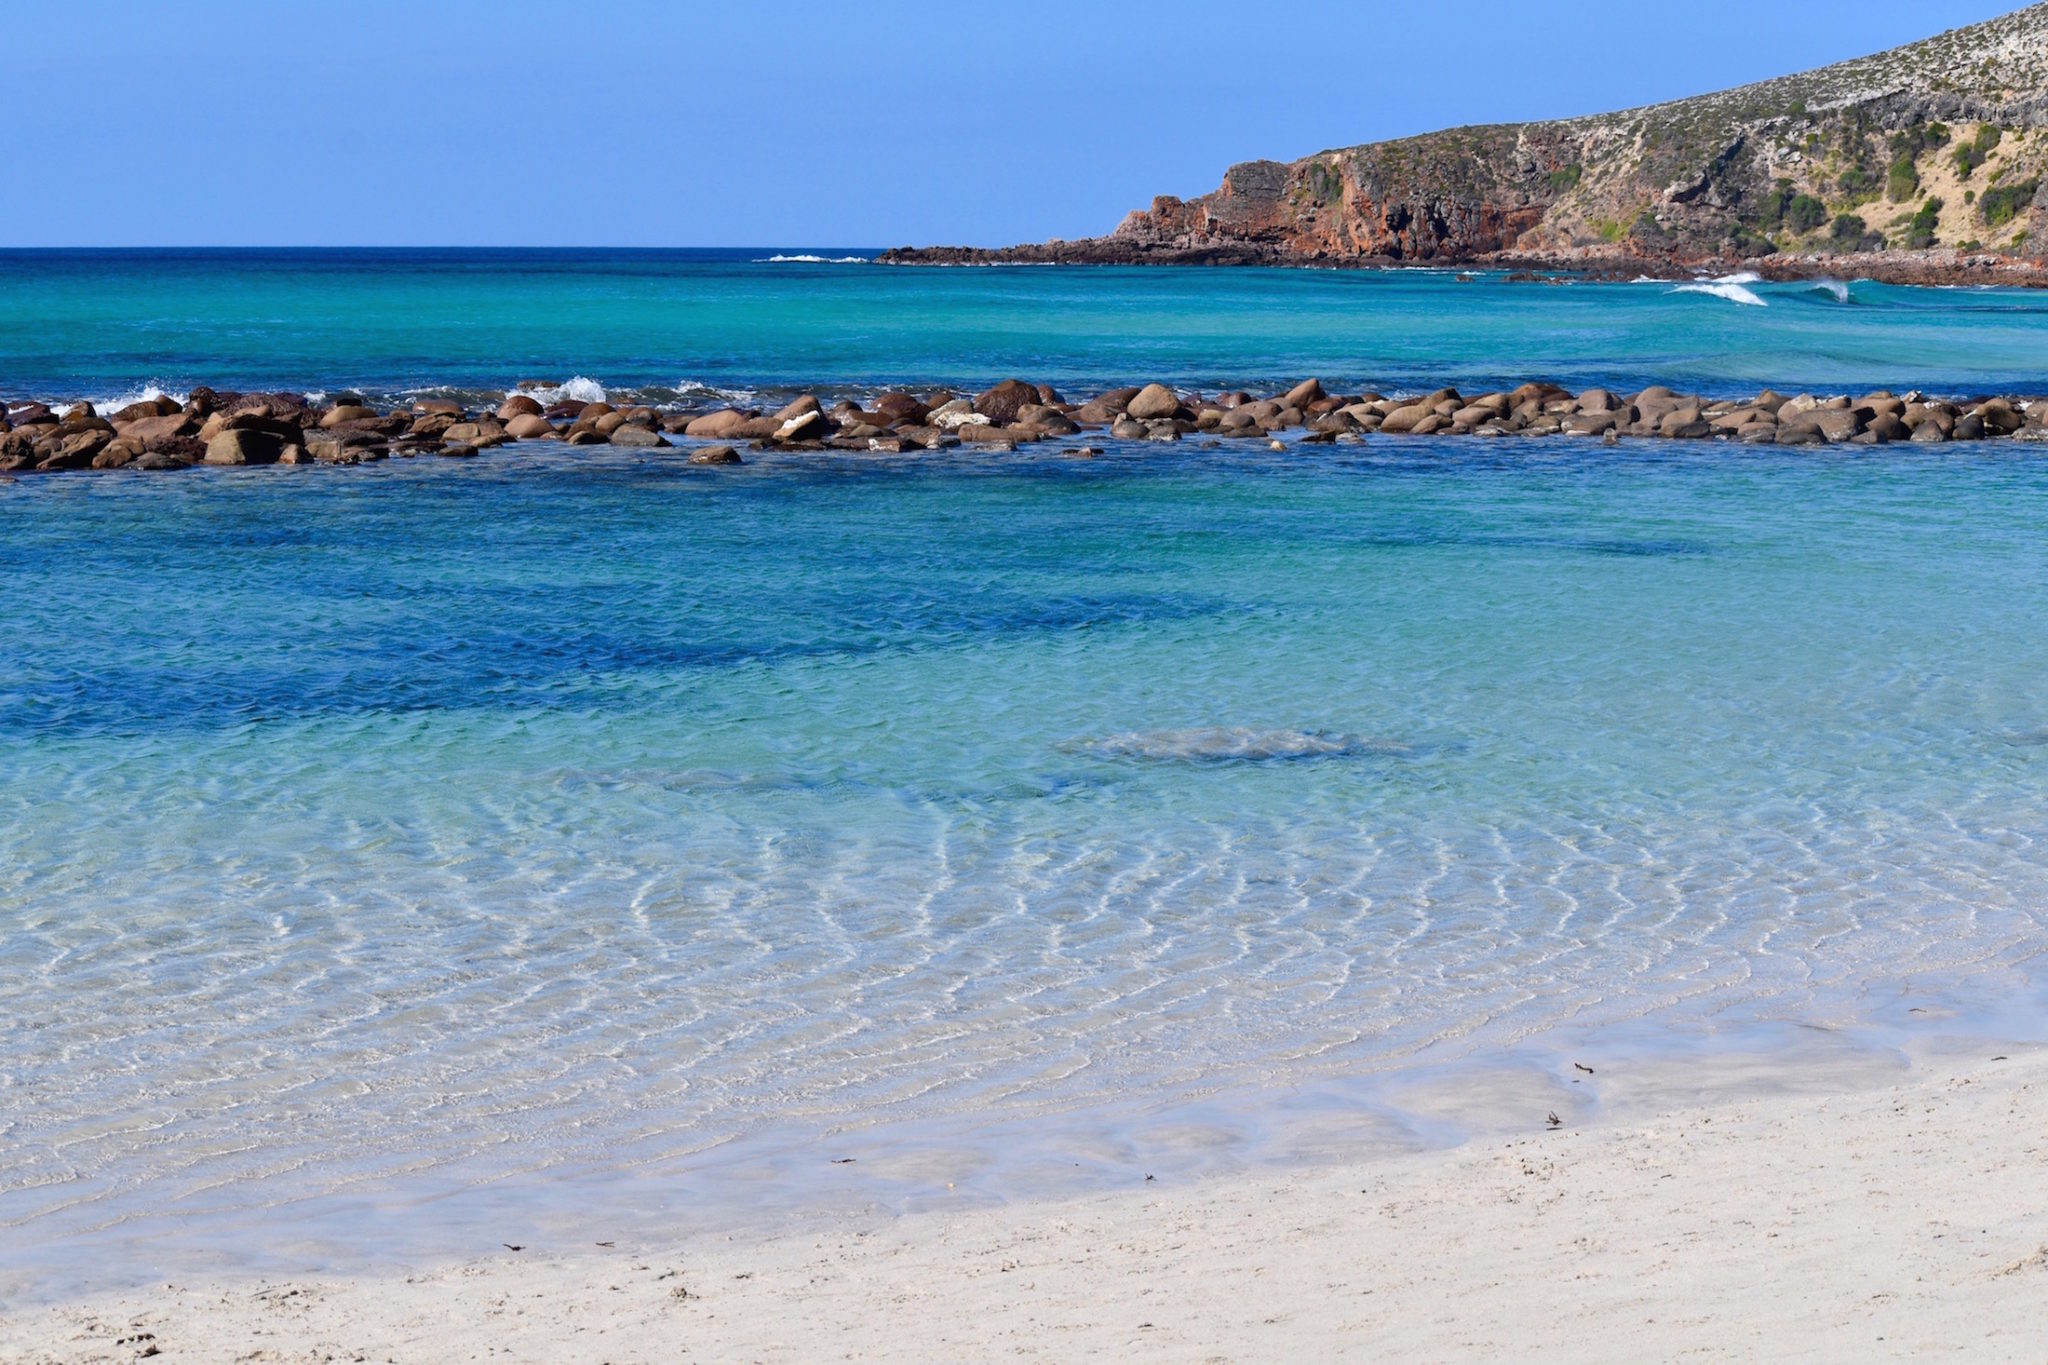 A Kangaroo Island beach with white sand and turquoise water